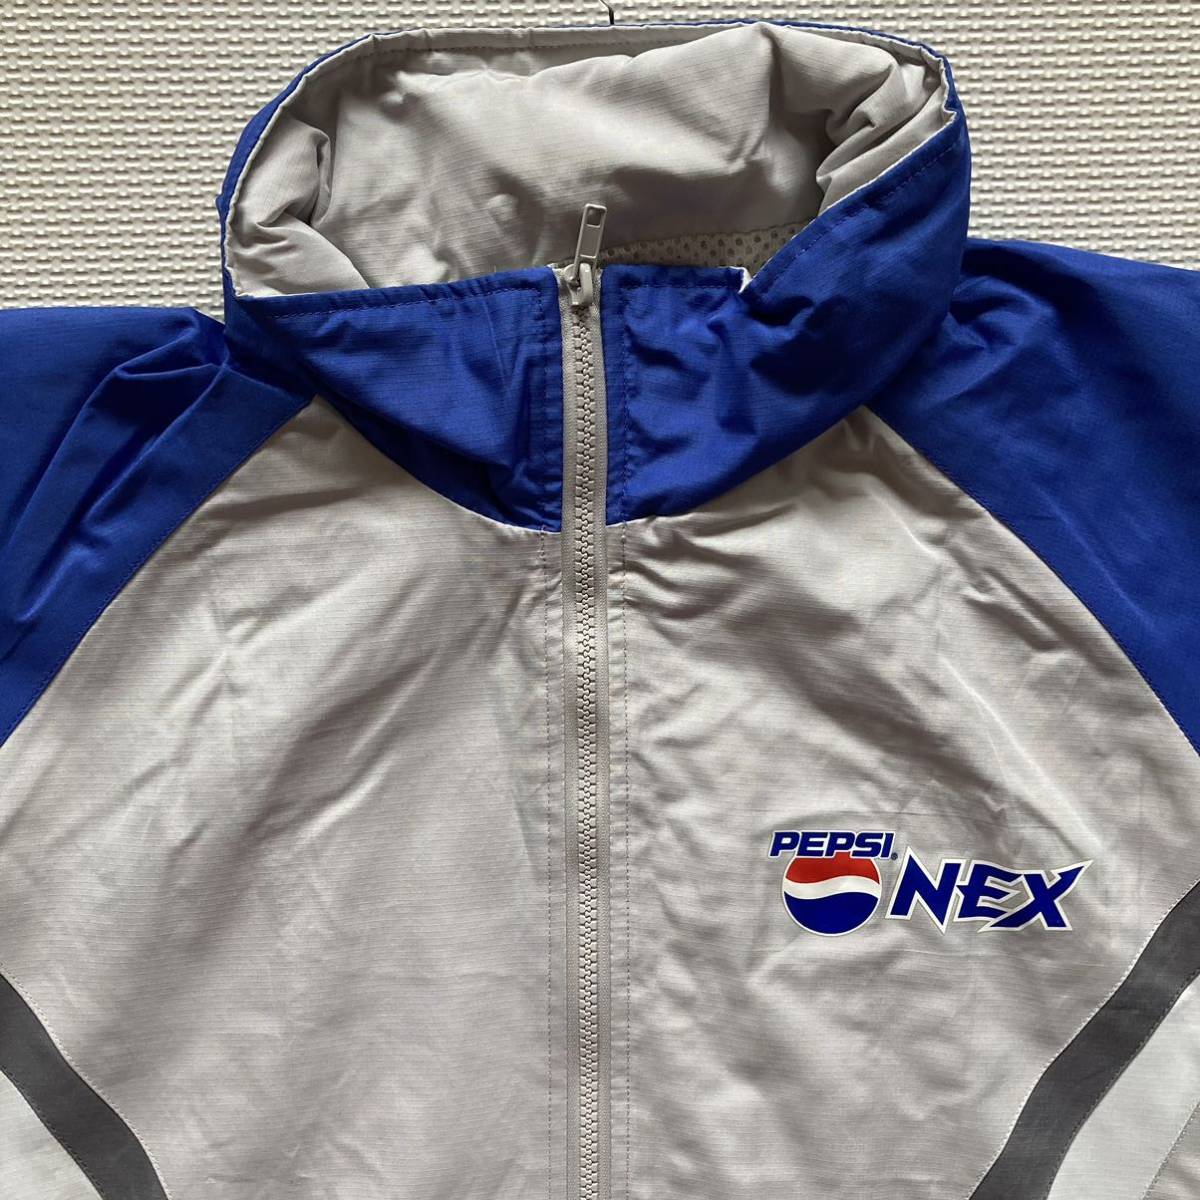 PEPSI NEX Pepsi neck s not for sale jacket windbreaker 